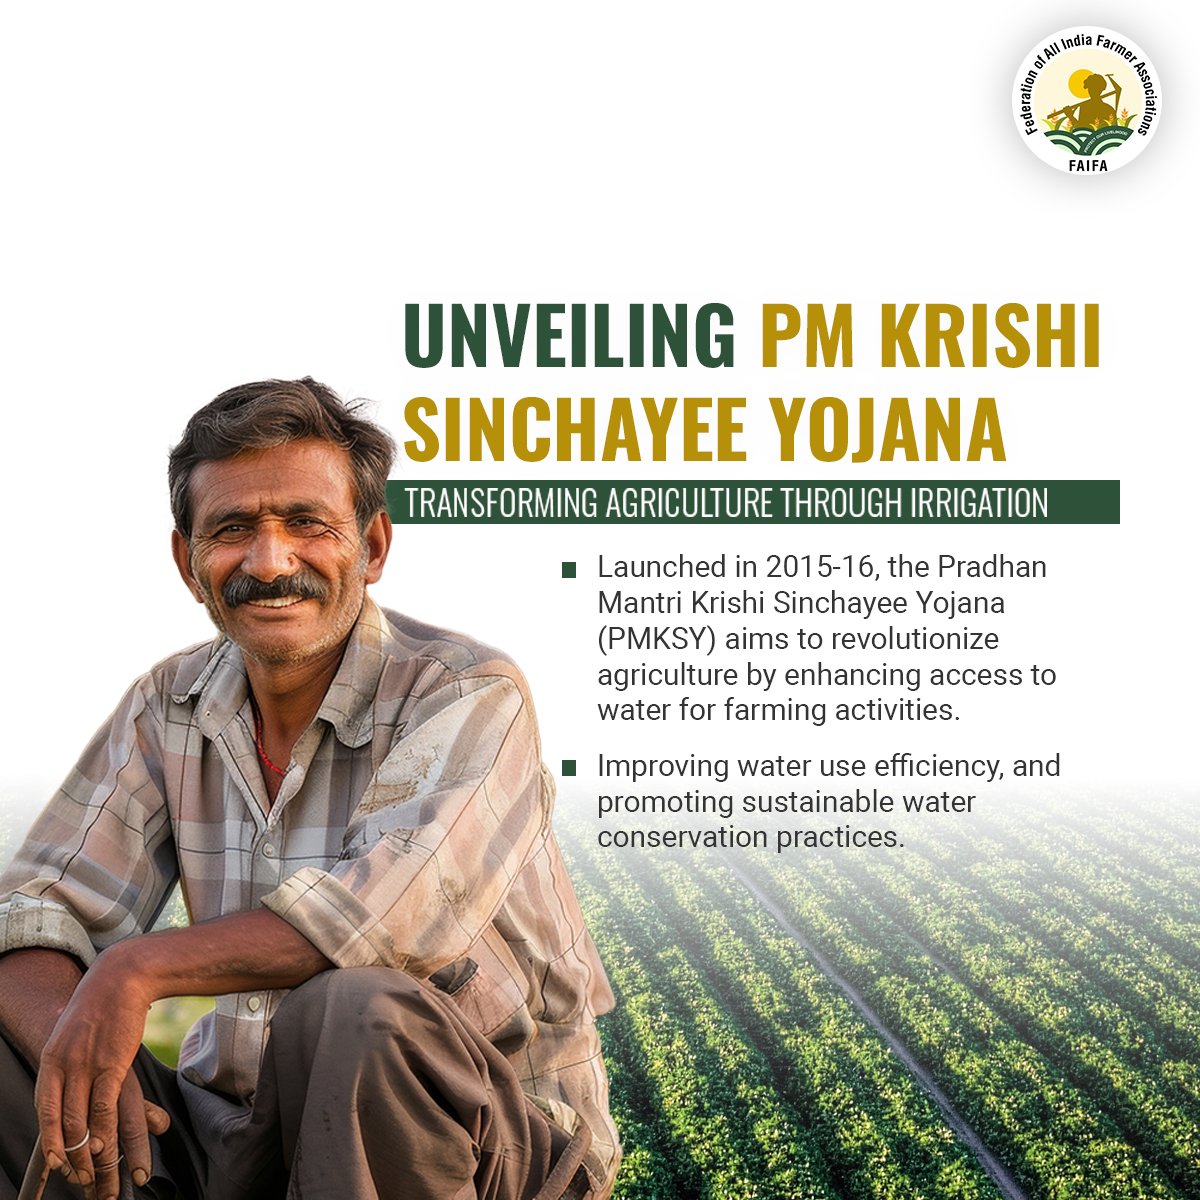 Enhancing Farming Potential: Pradhan Mantri Krishi Sinchayee Yojana (PMKSY) revolutionizes irrigation methods for agricultural prosperity. 
.
#PMKSY #SustainableIrrigation
#SustainableAgriculture
#FarmersFirst